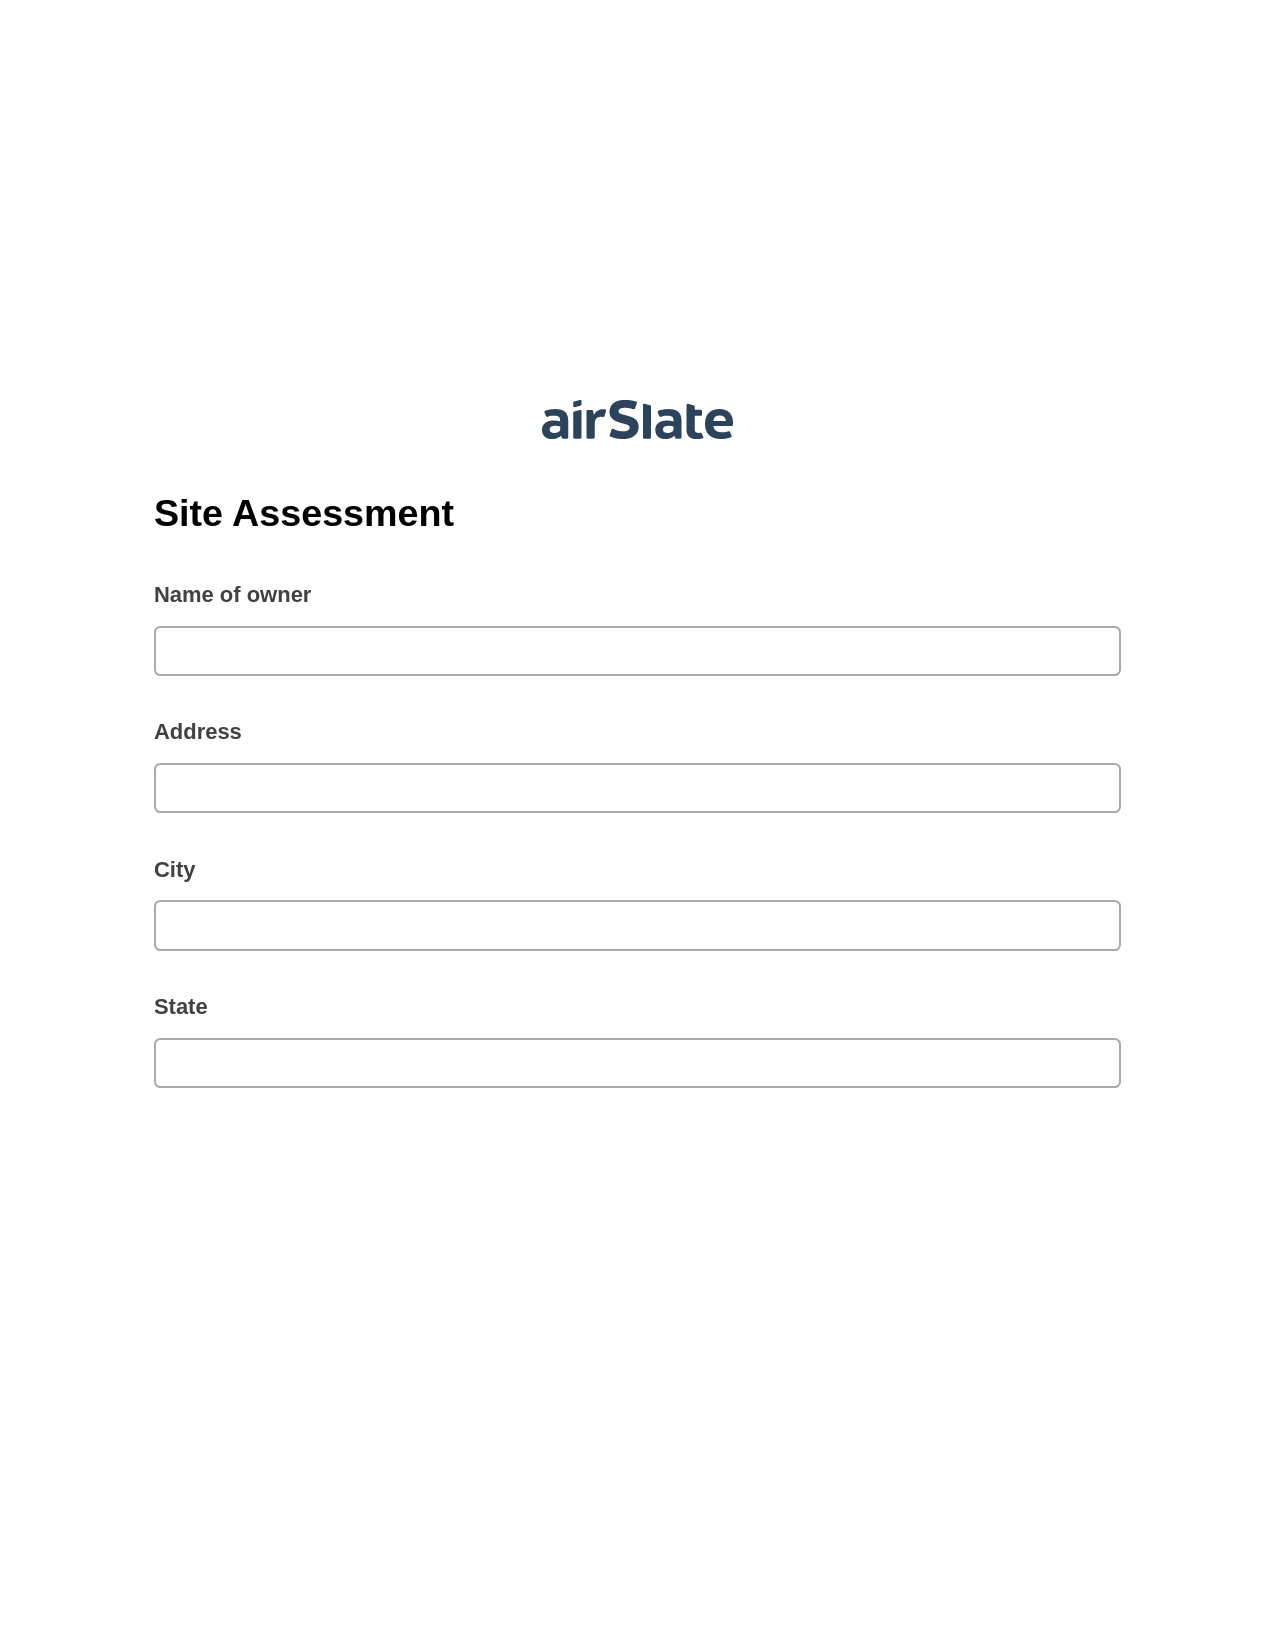 Site Assessment Pre-fill from Litmos bot, Invoke Salesforce Process Bot, Export to Smartsheet